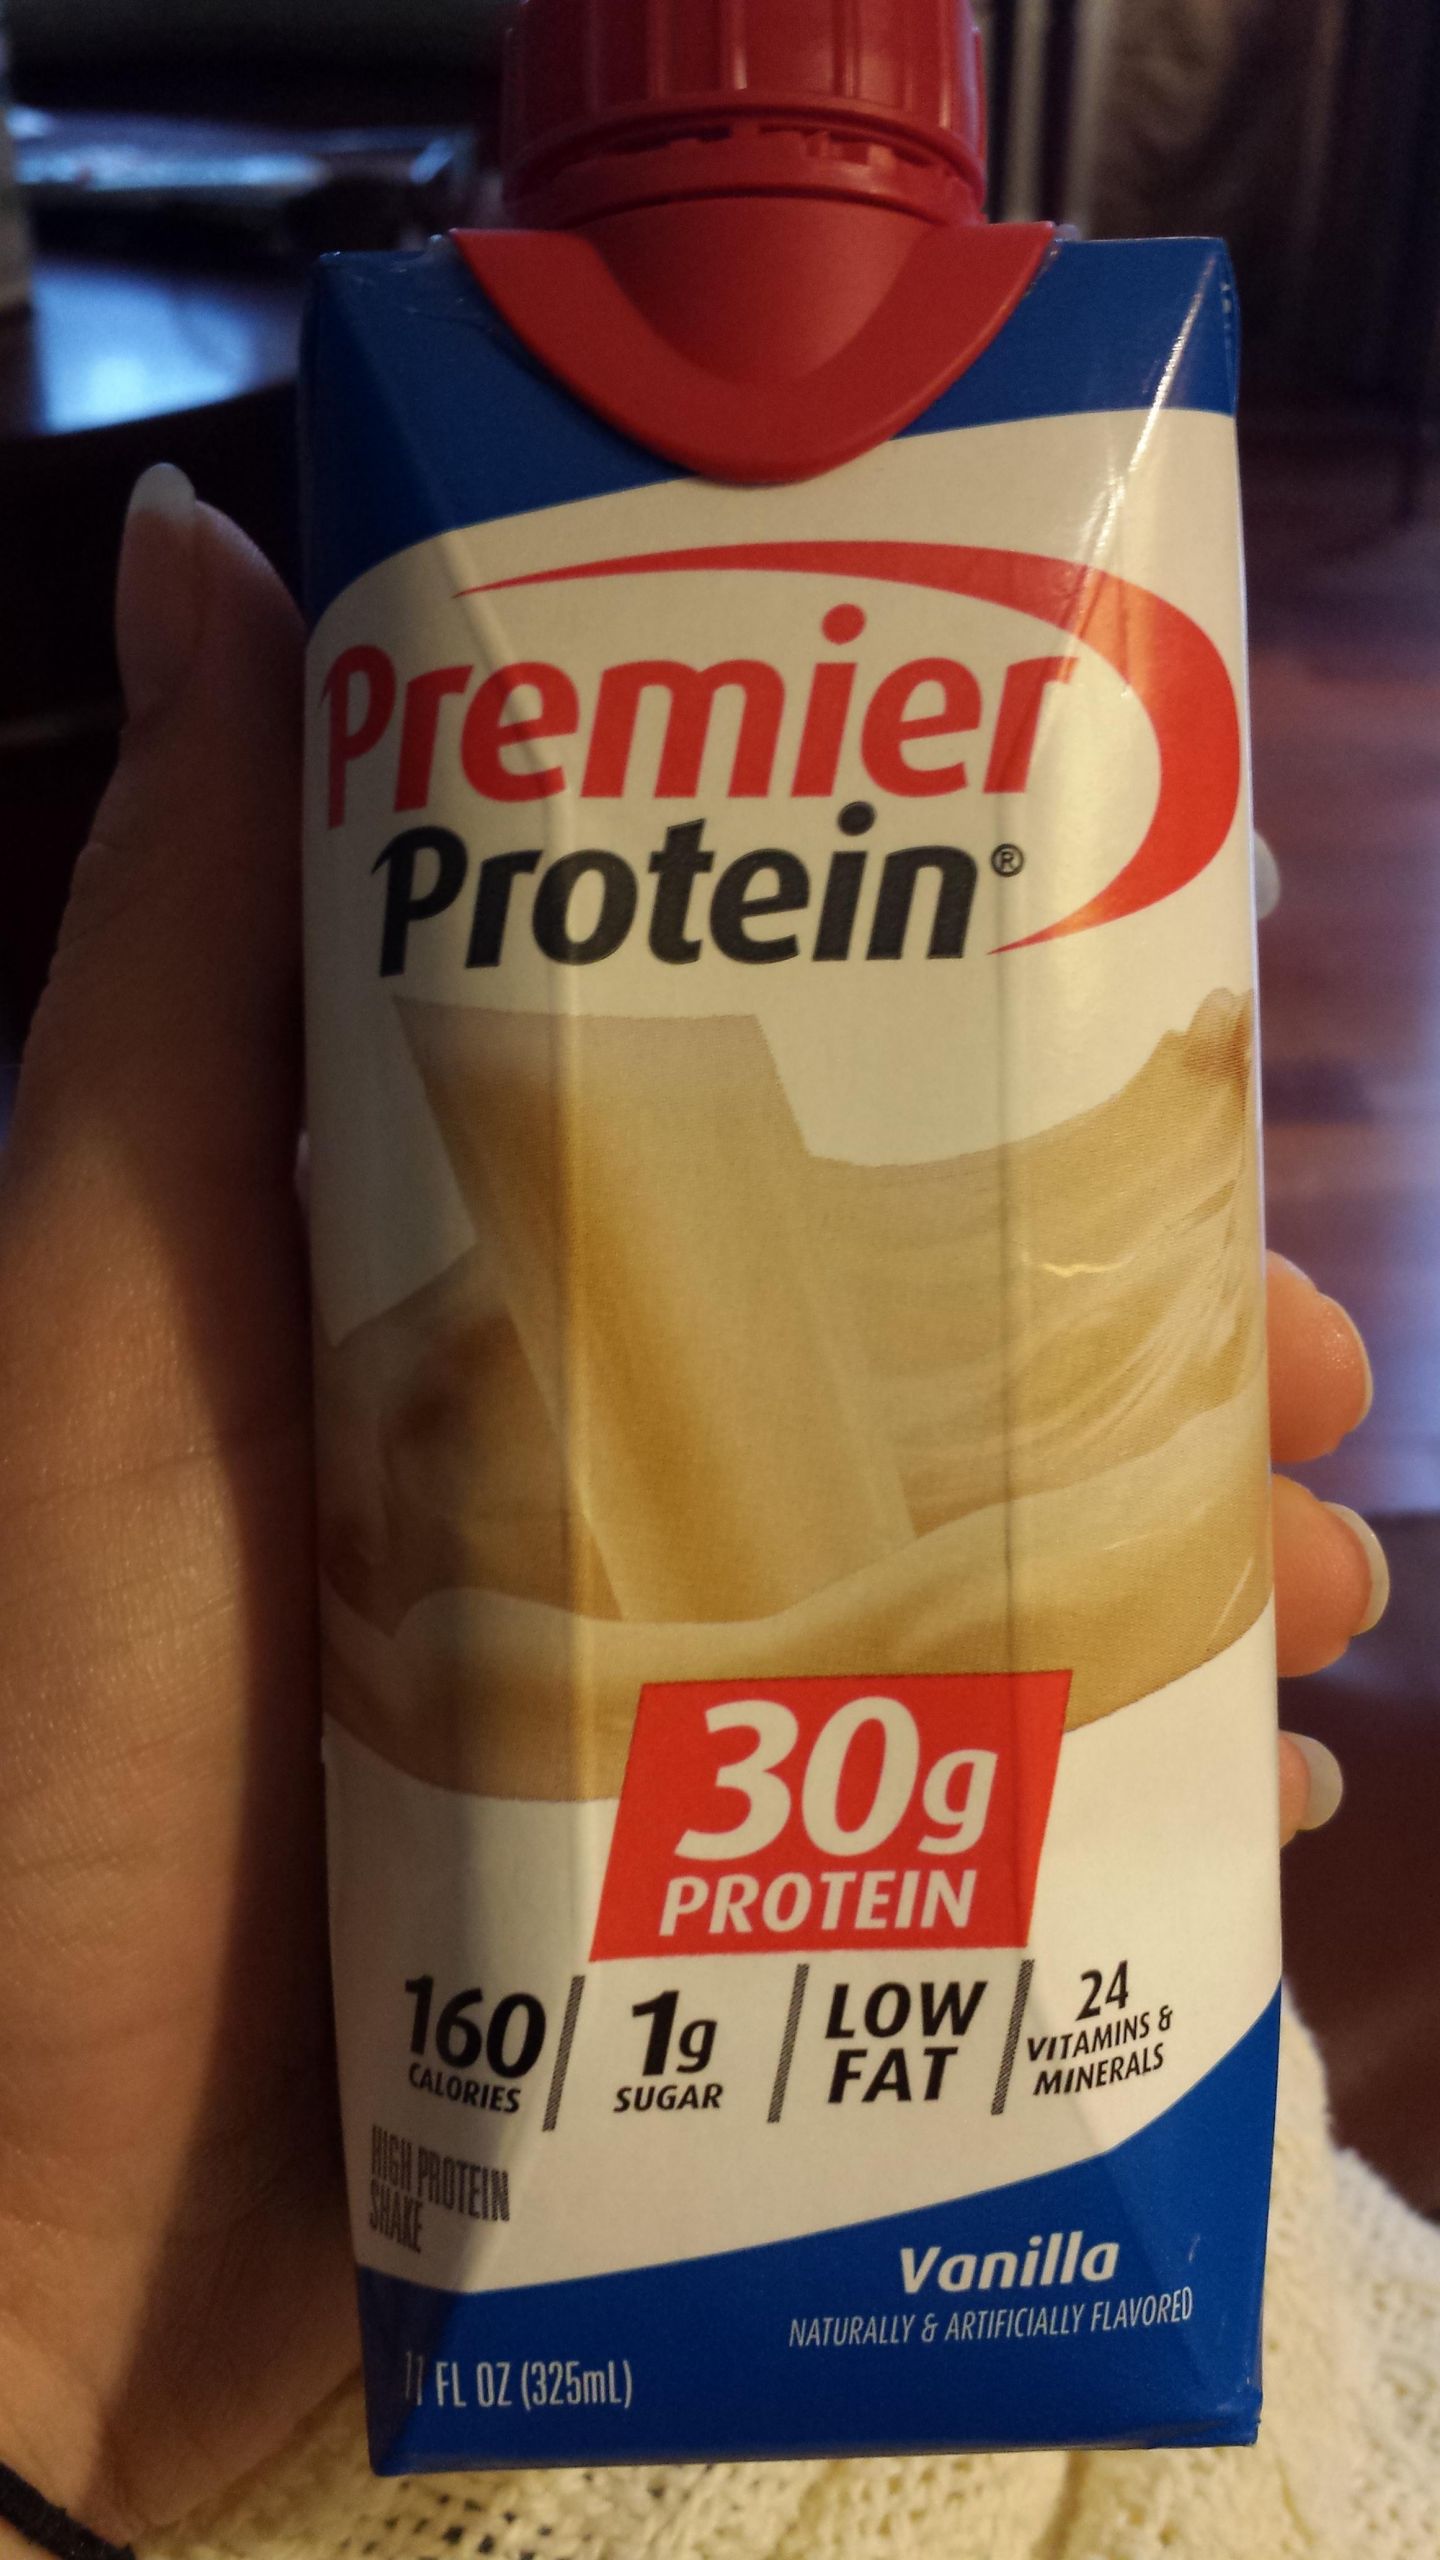 Premier Diet Keto
 Have you ever heard of Premier Protein keto